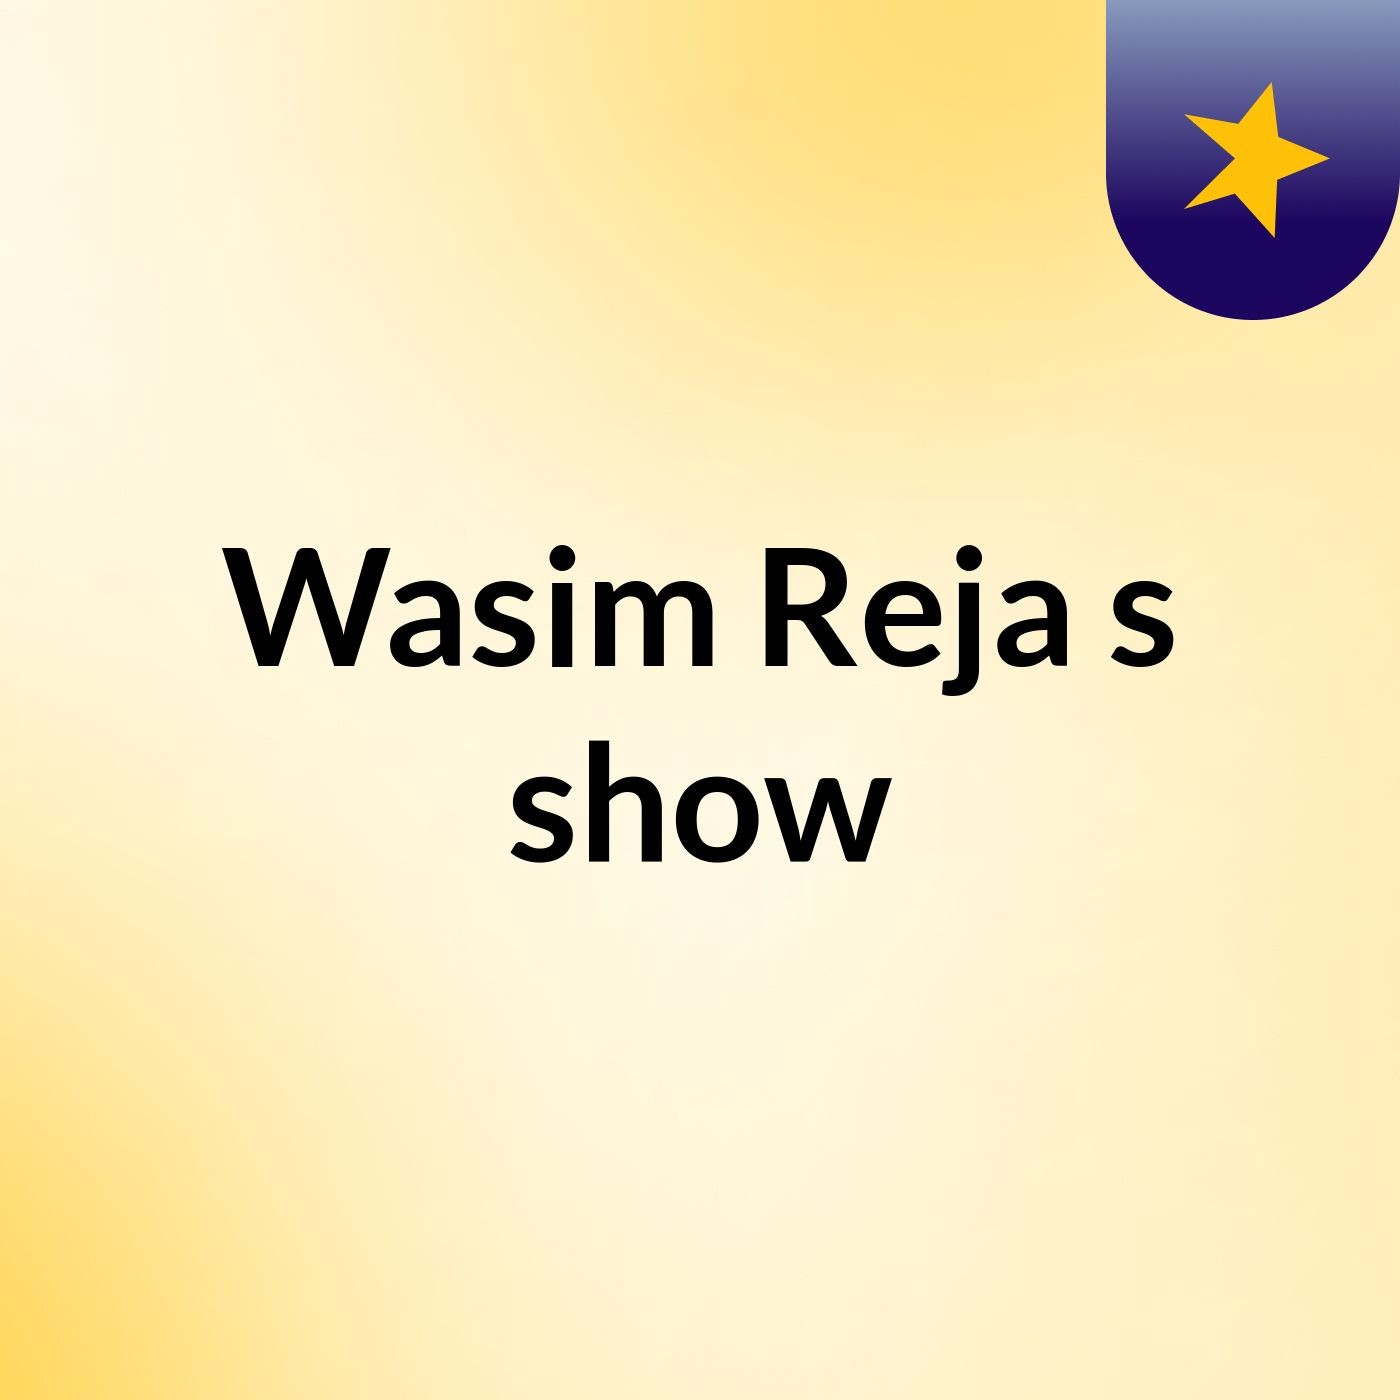 Wasim Reja's show